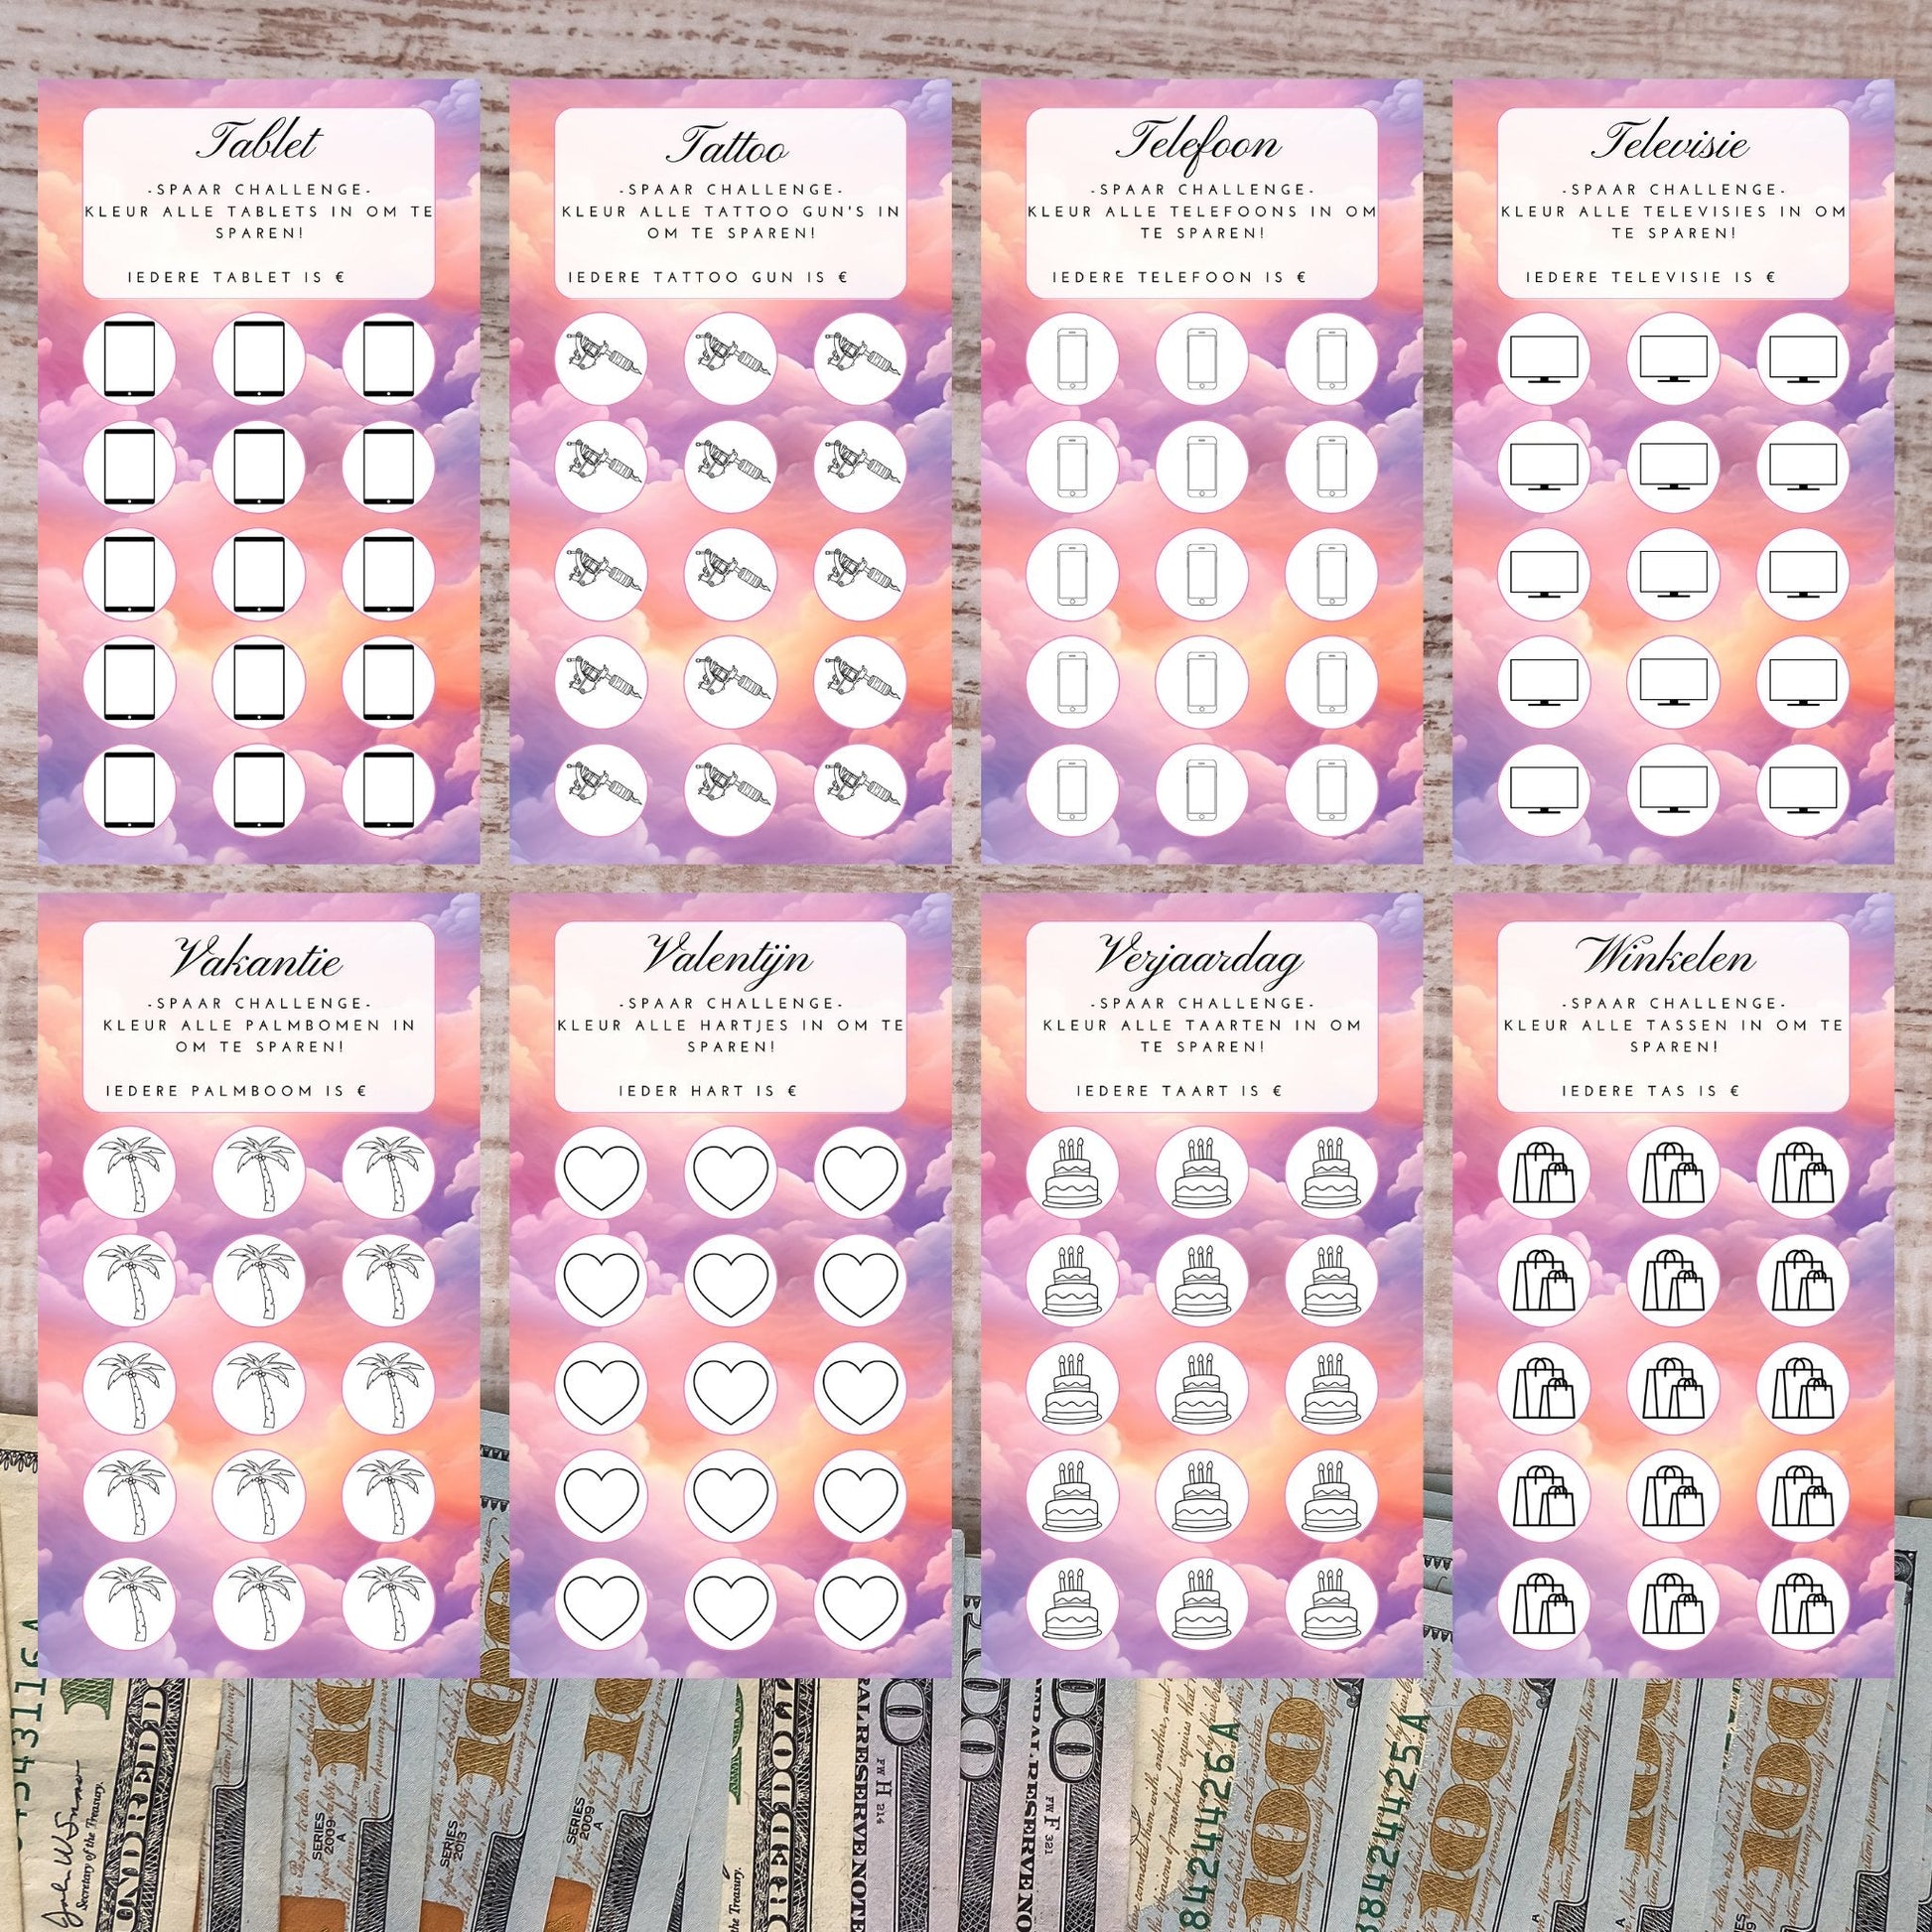 Cash stuffing Challenges - 43 Verschillende Challenges - Pastel sunset - Download 9x16 cm en 8,5x16 cm - Print & Plan